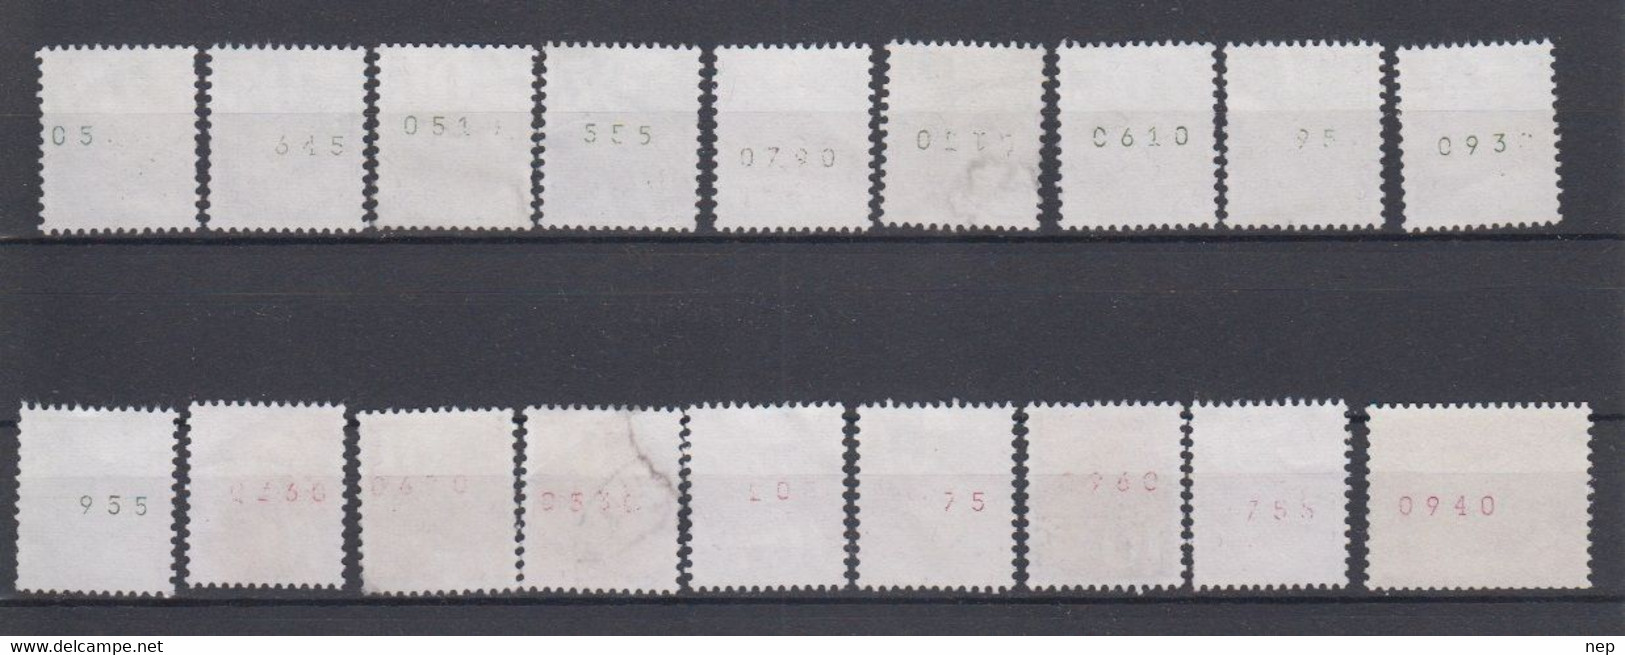 ZWITSERLAND - Michel - 1960/70 - Nr 699 R + 933 (x10) + 934 (x7) - (Verschillende Rolnummers) - Gest/Obl/Us - Rouleaux